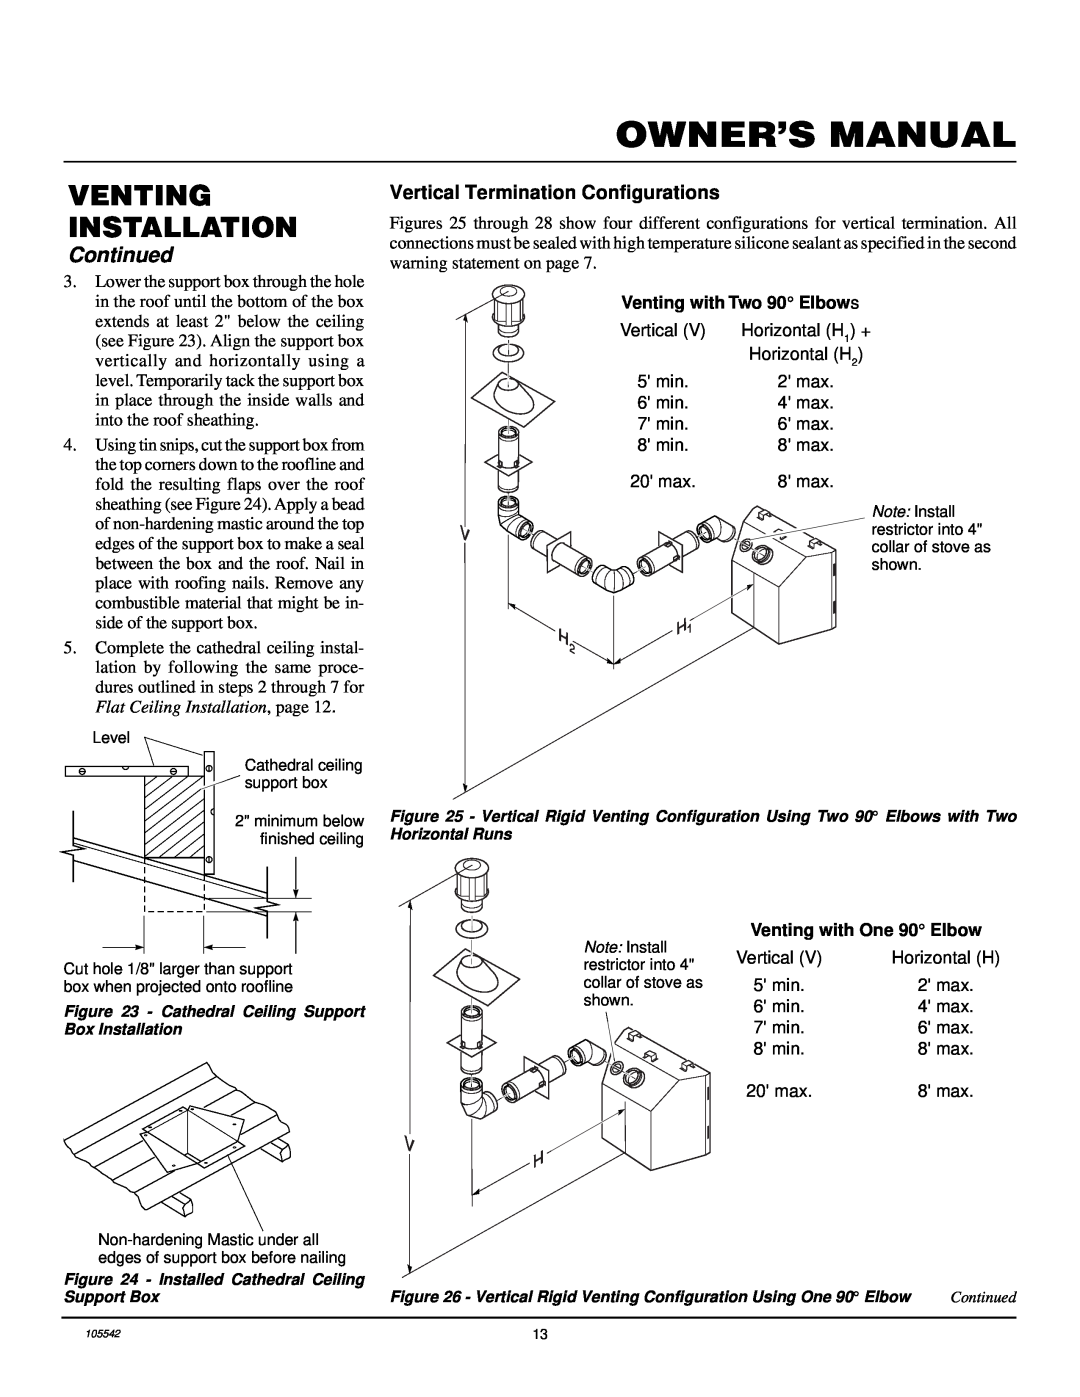 Desa CHDV41N/P Vertical Termination Configurations, Owner’S Manual, Venting Installation, Continued, Horizontal Runs 